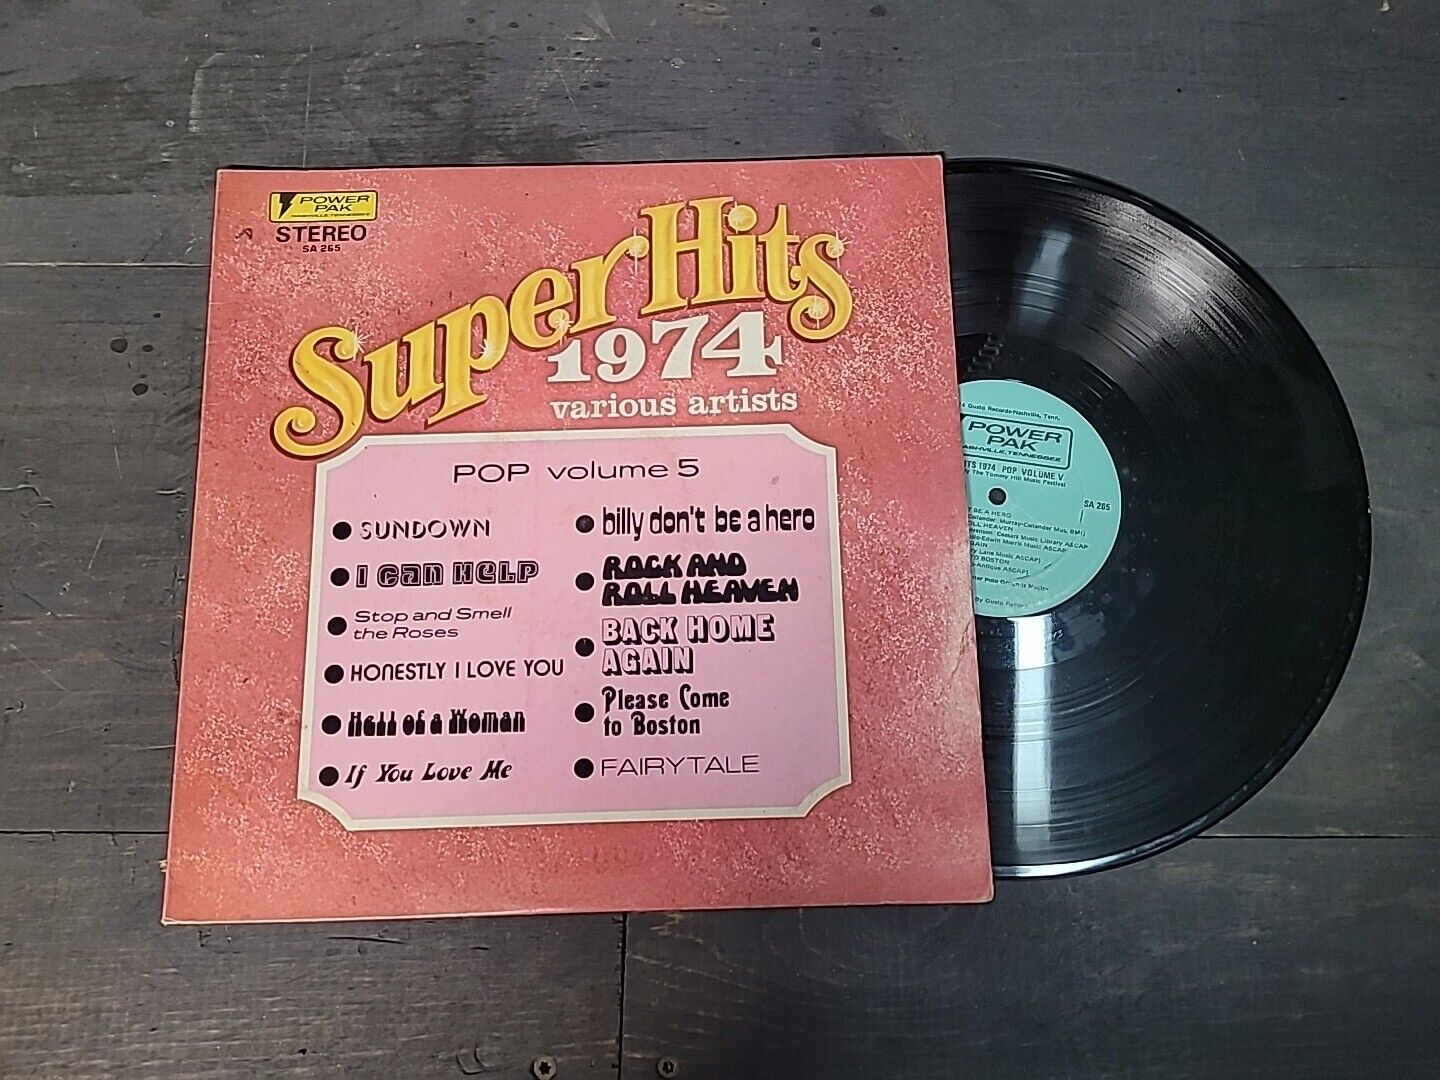 **XXXRARE** SUPERHITS 1974 POP VOLUME 5 SA 265 33RPM VINTAGE VINYL RECORD POWER